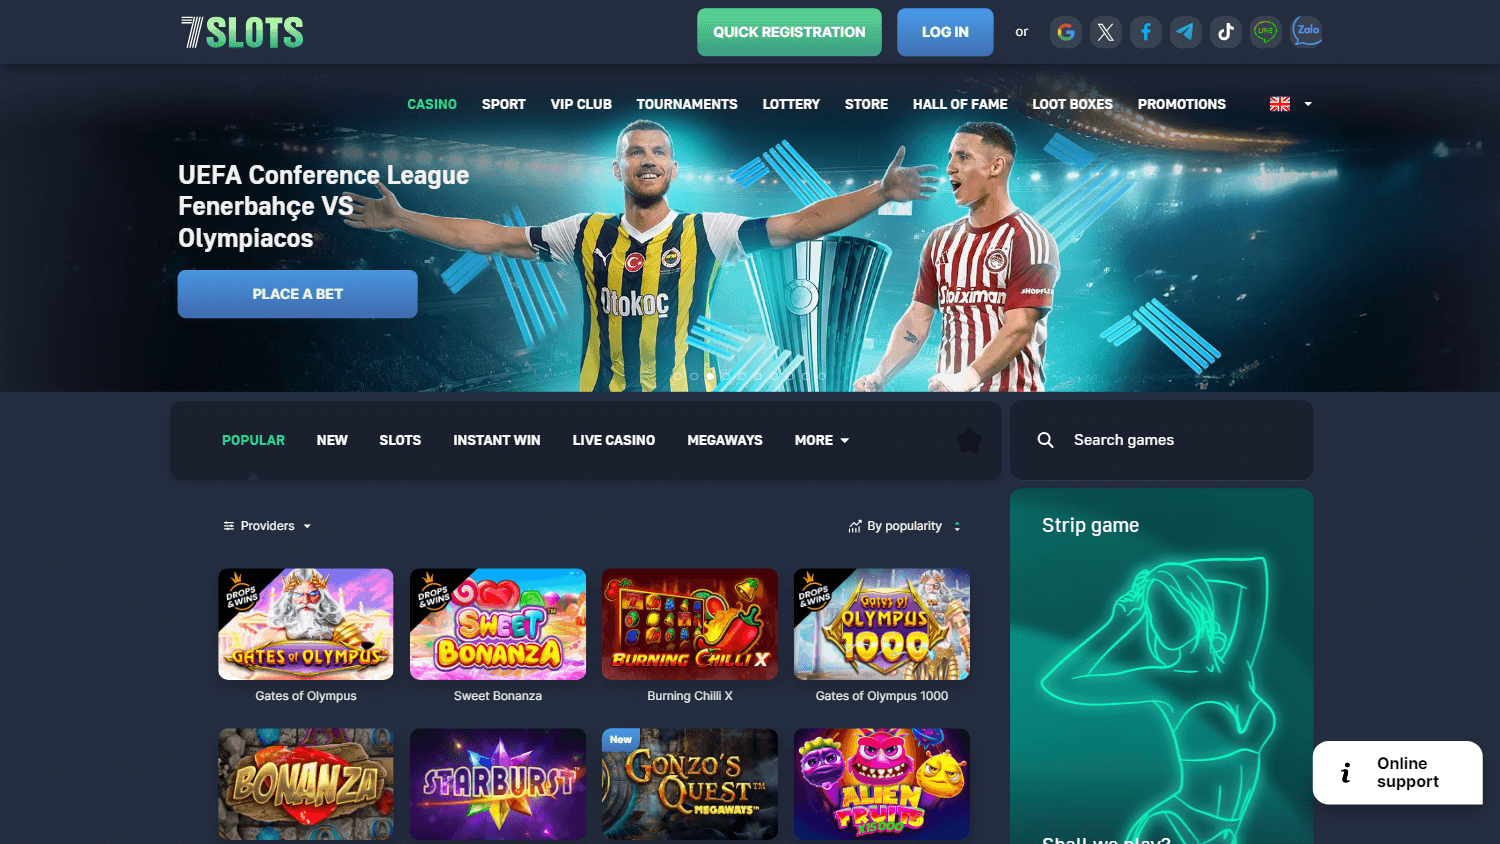 7slots_casino_homepage_desktop